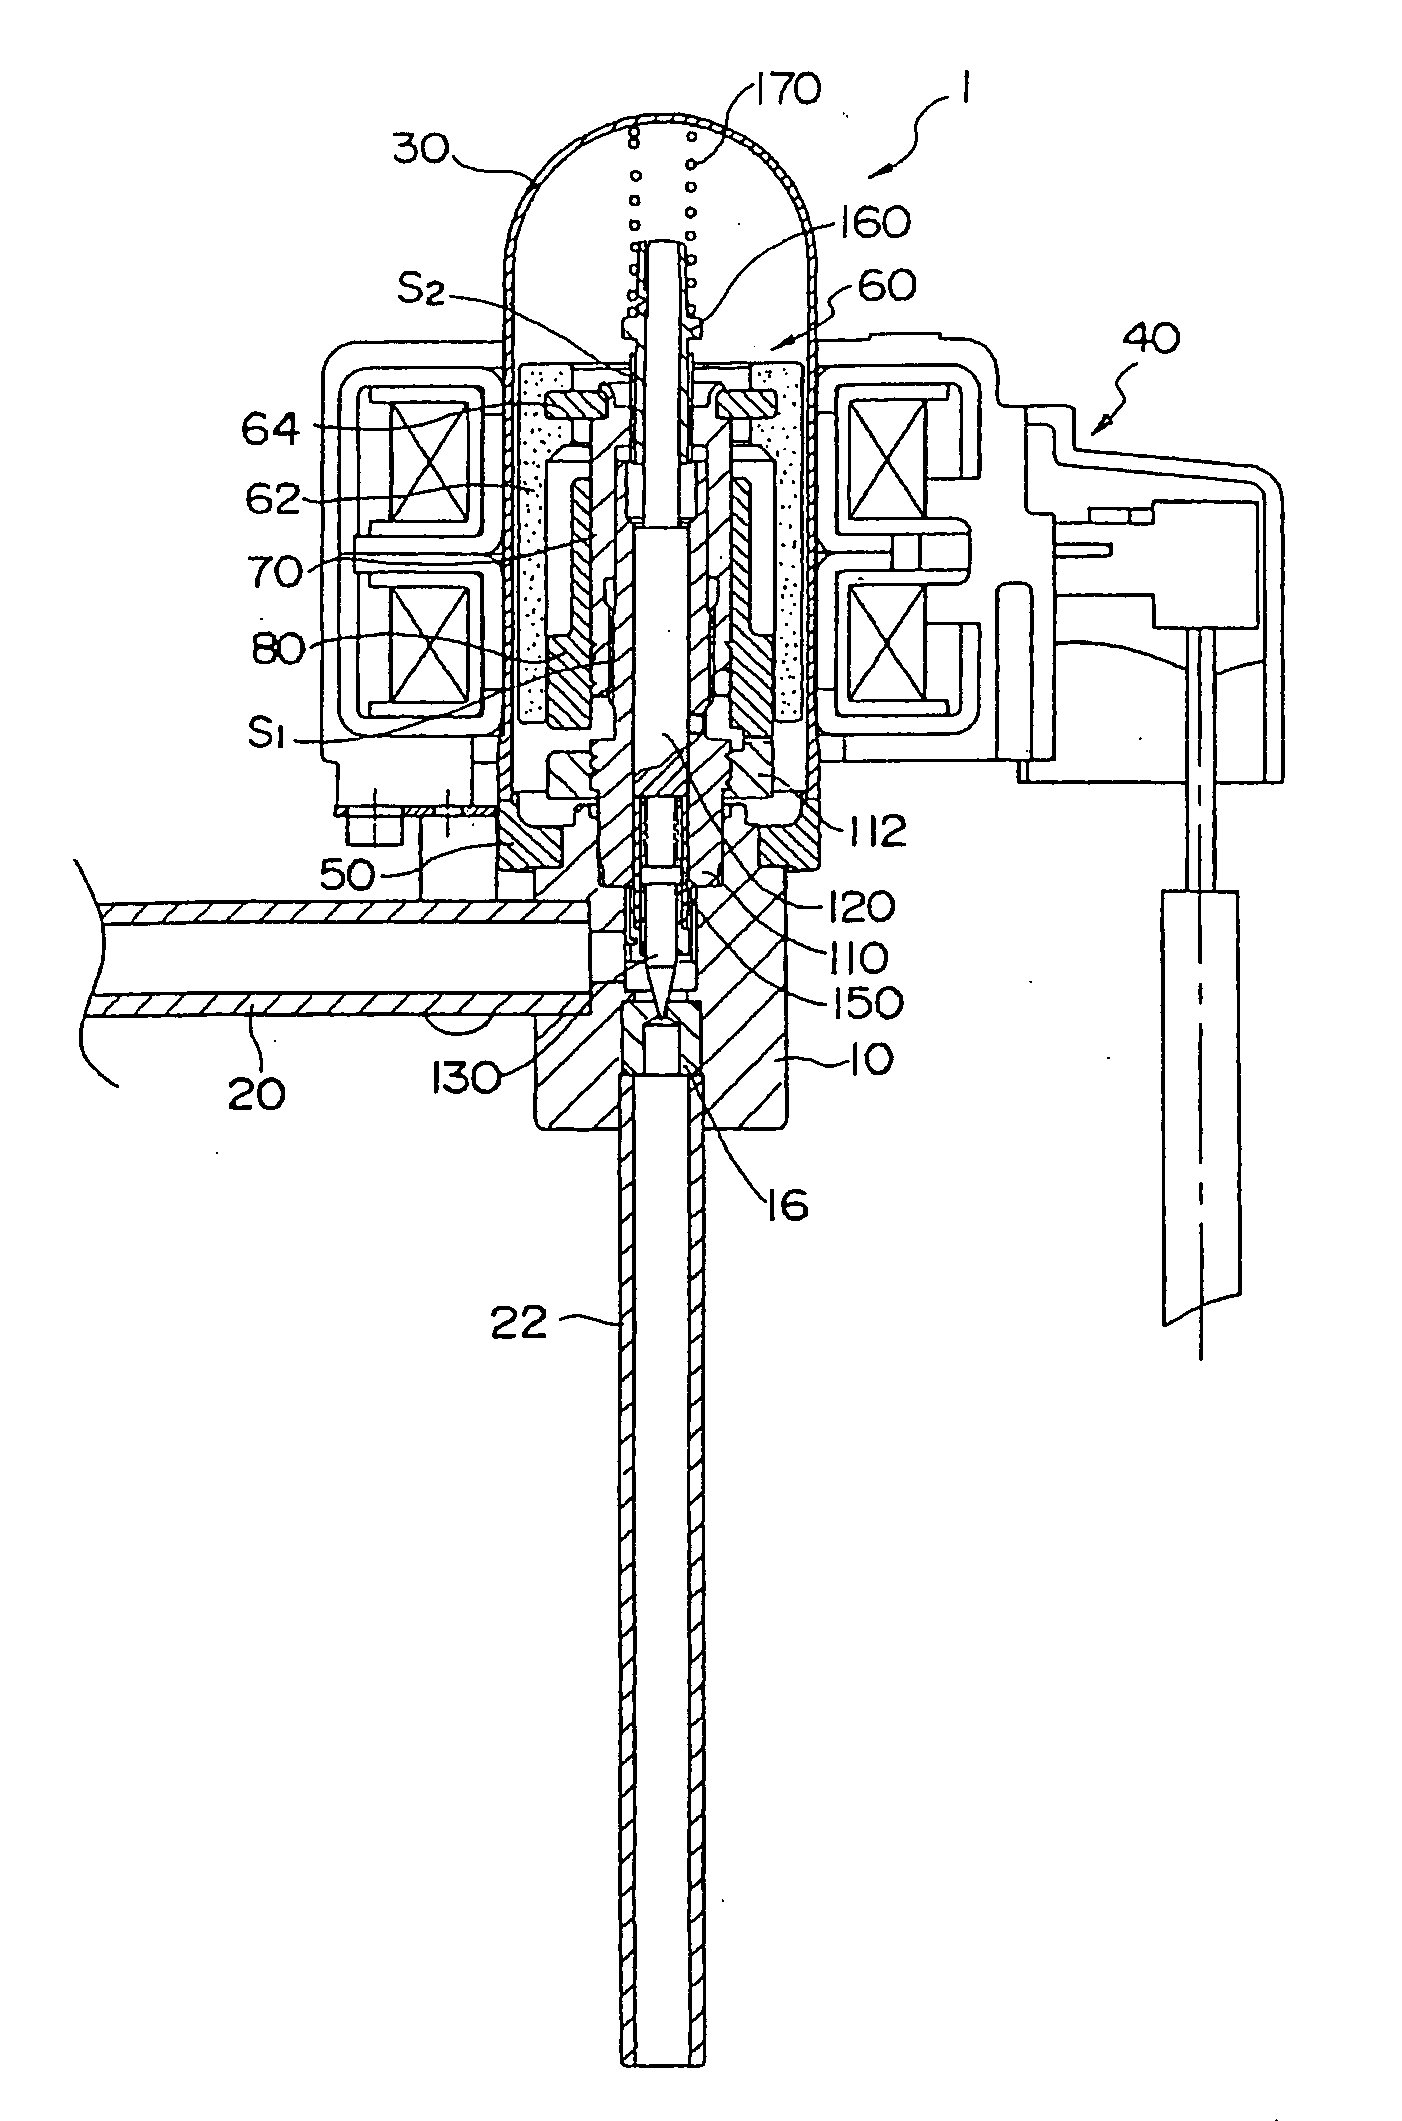 Motor-operated valve